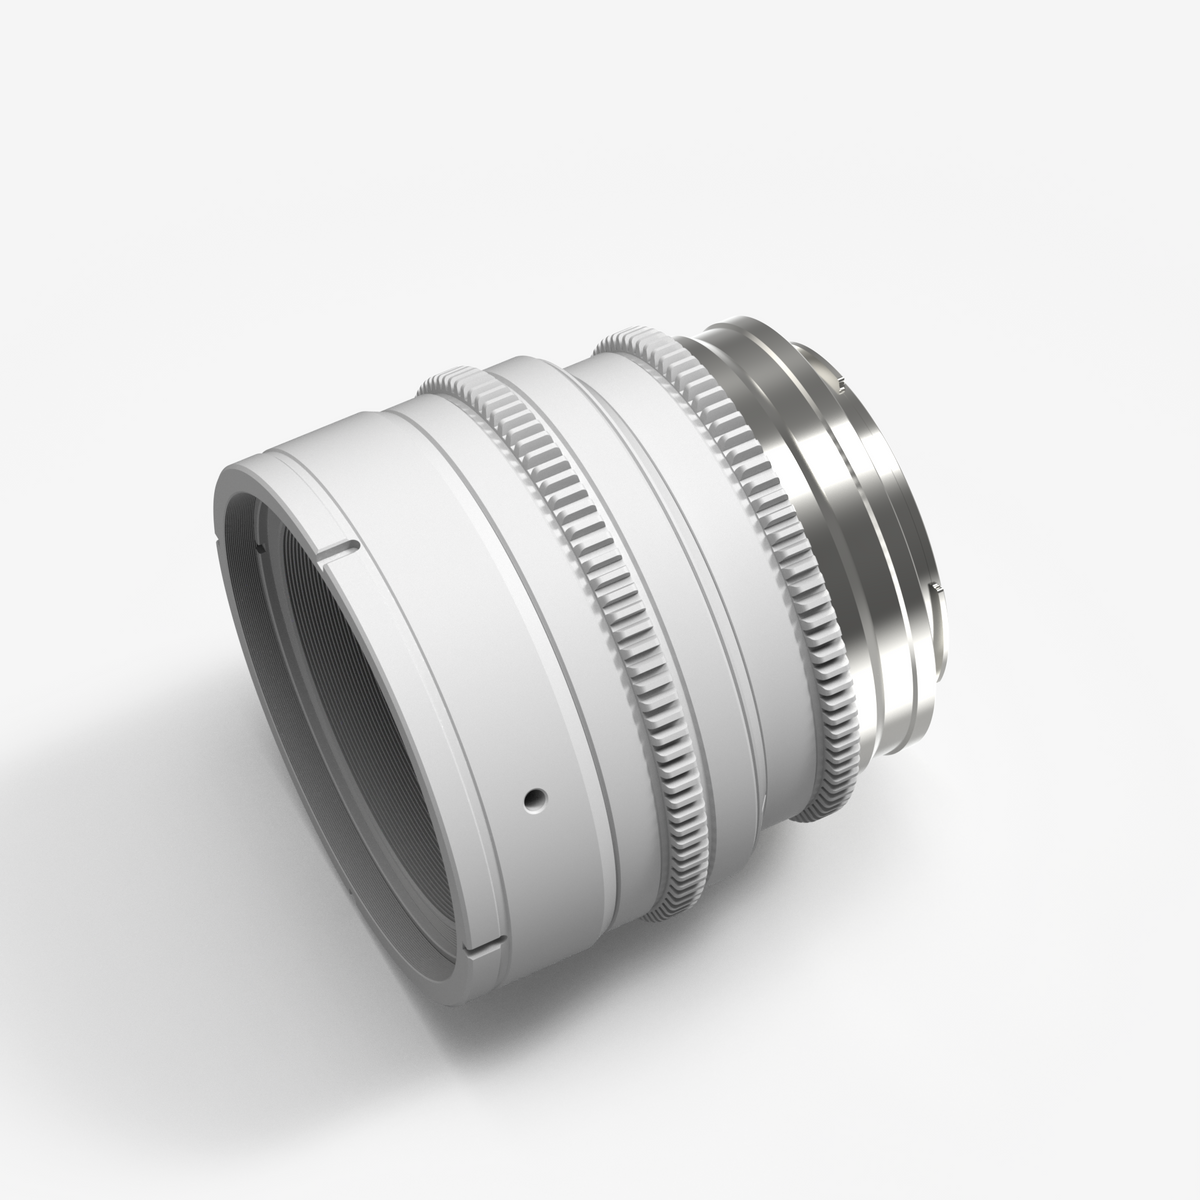 Dulens 85mm EF-Mount Kit for APO MINI Prime 85mm Lens